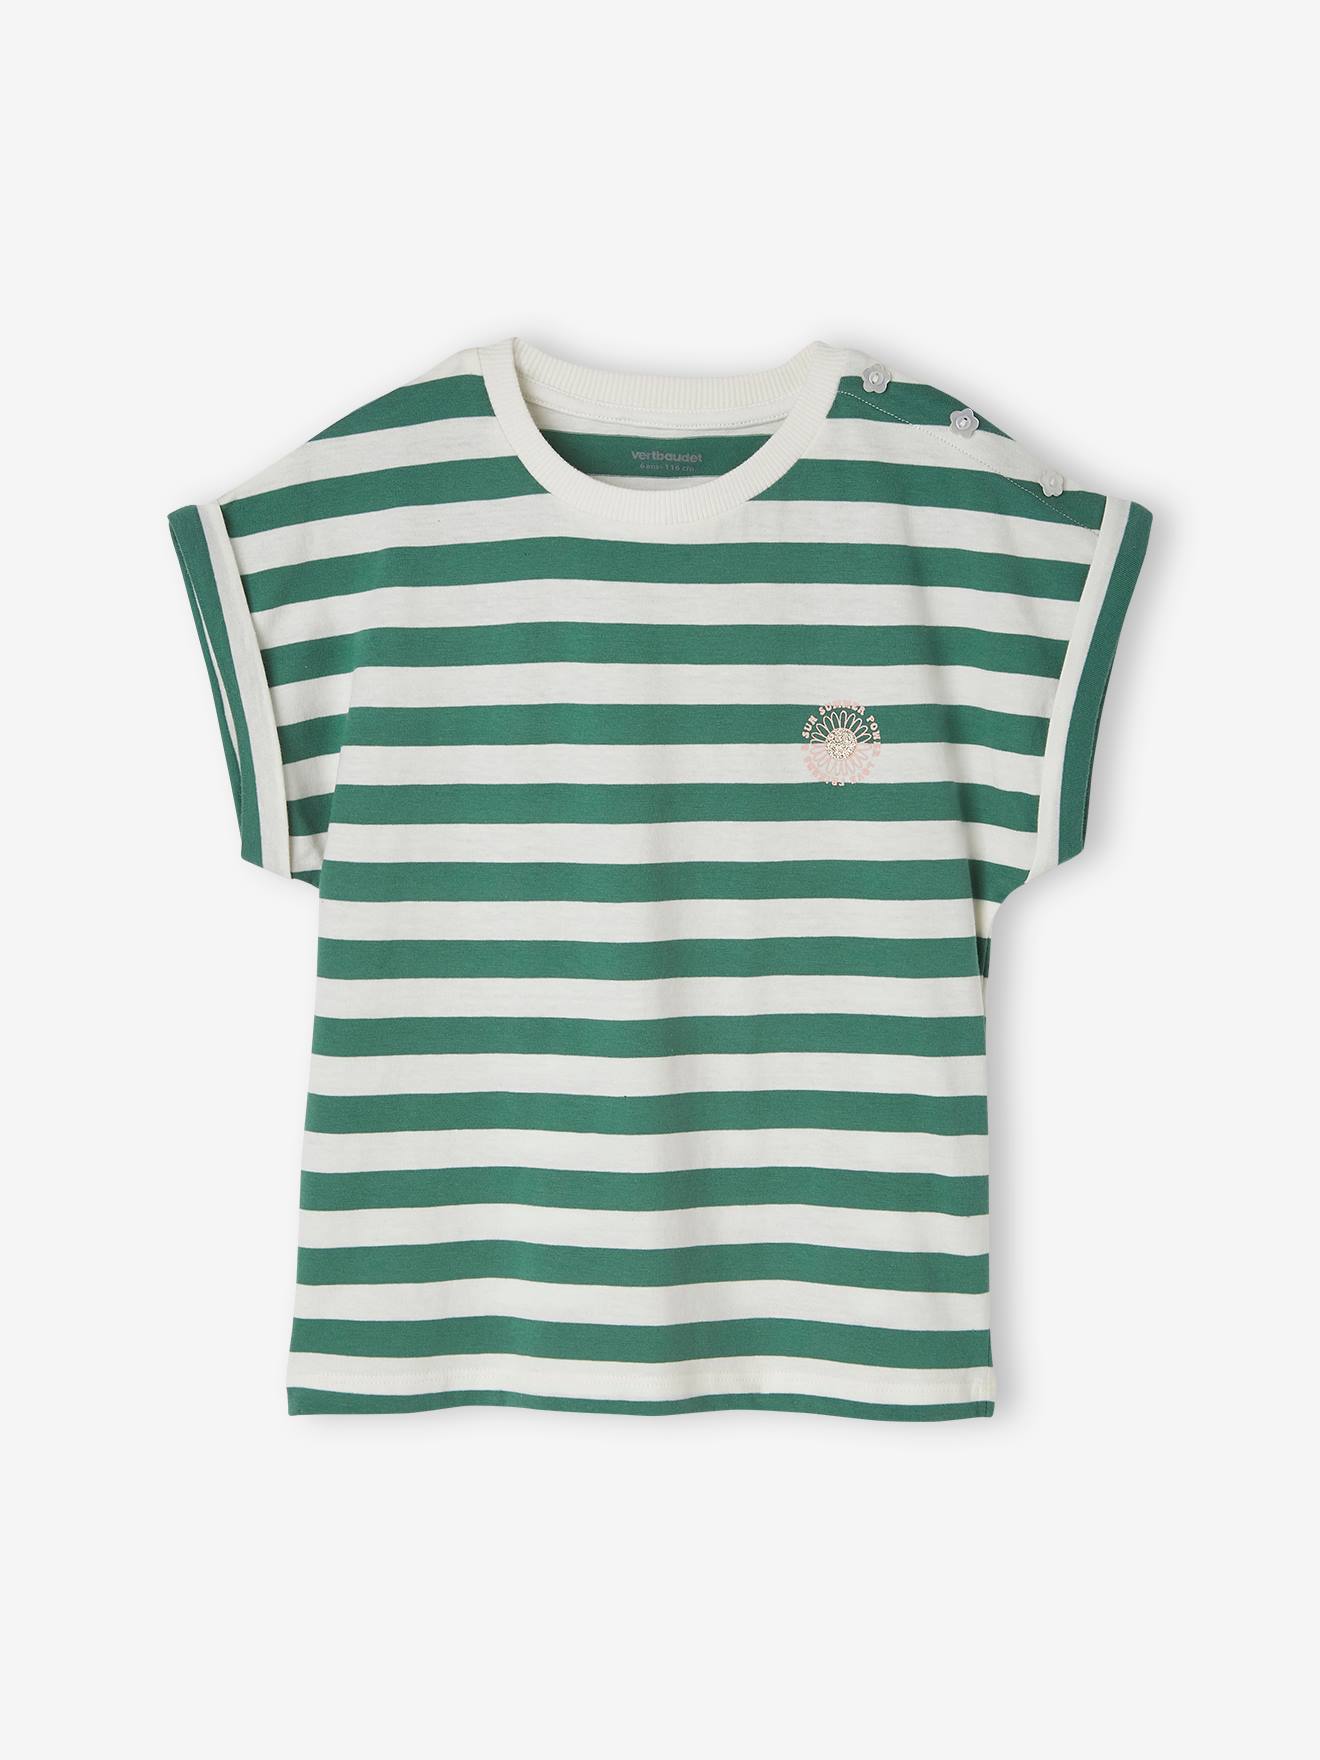 Camiseta con mensaje, para niña verde pino - Vertbaudet